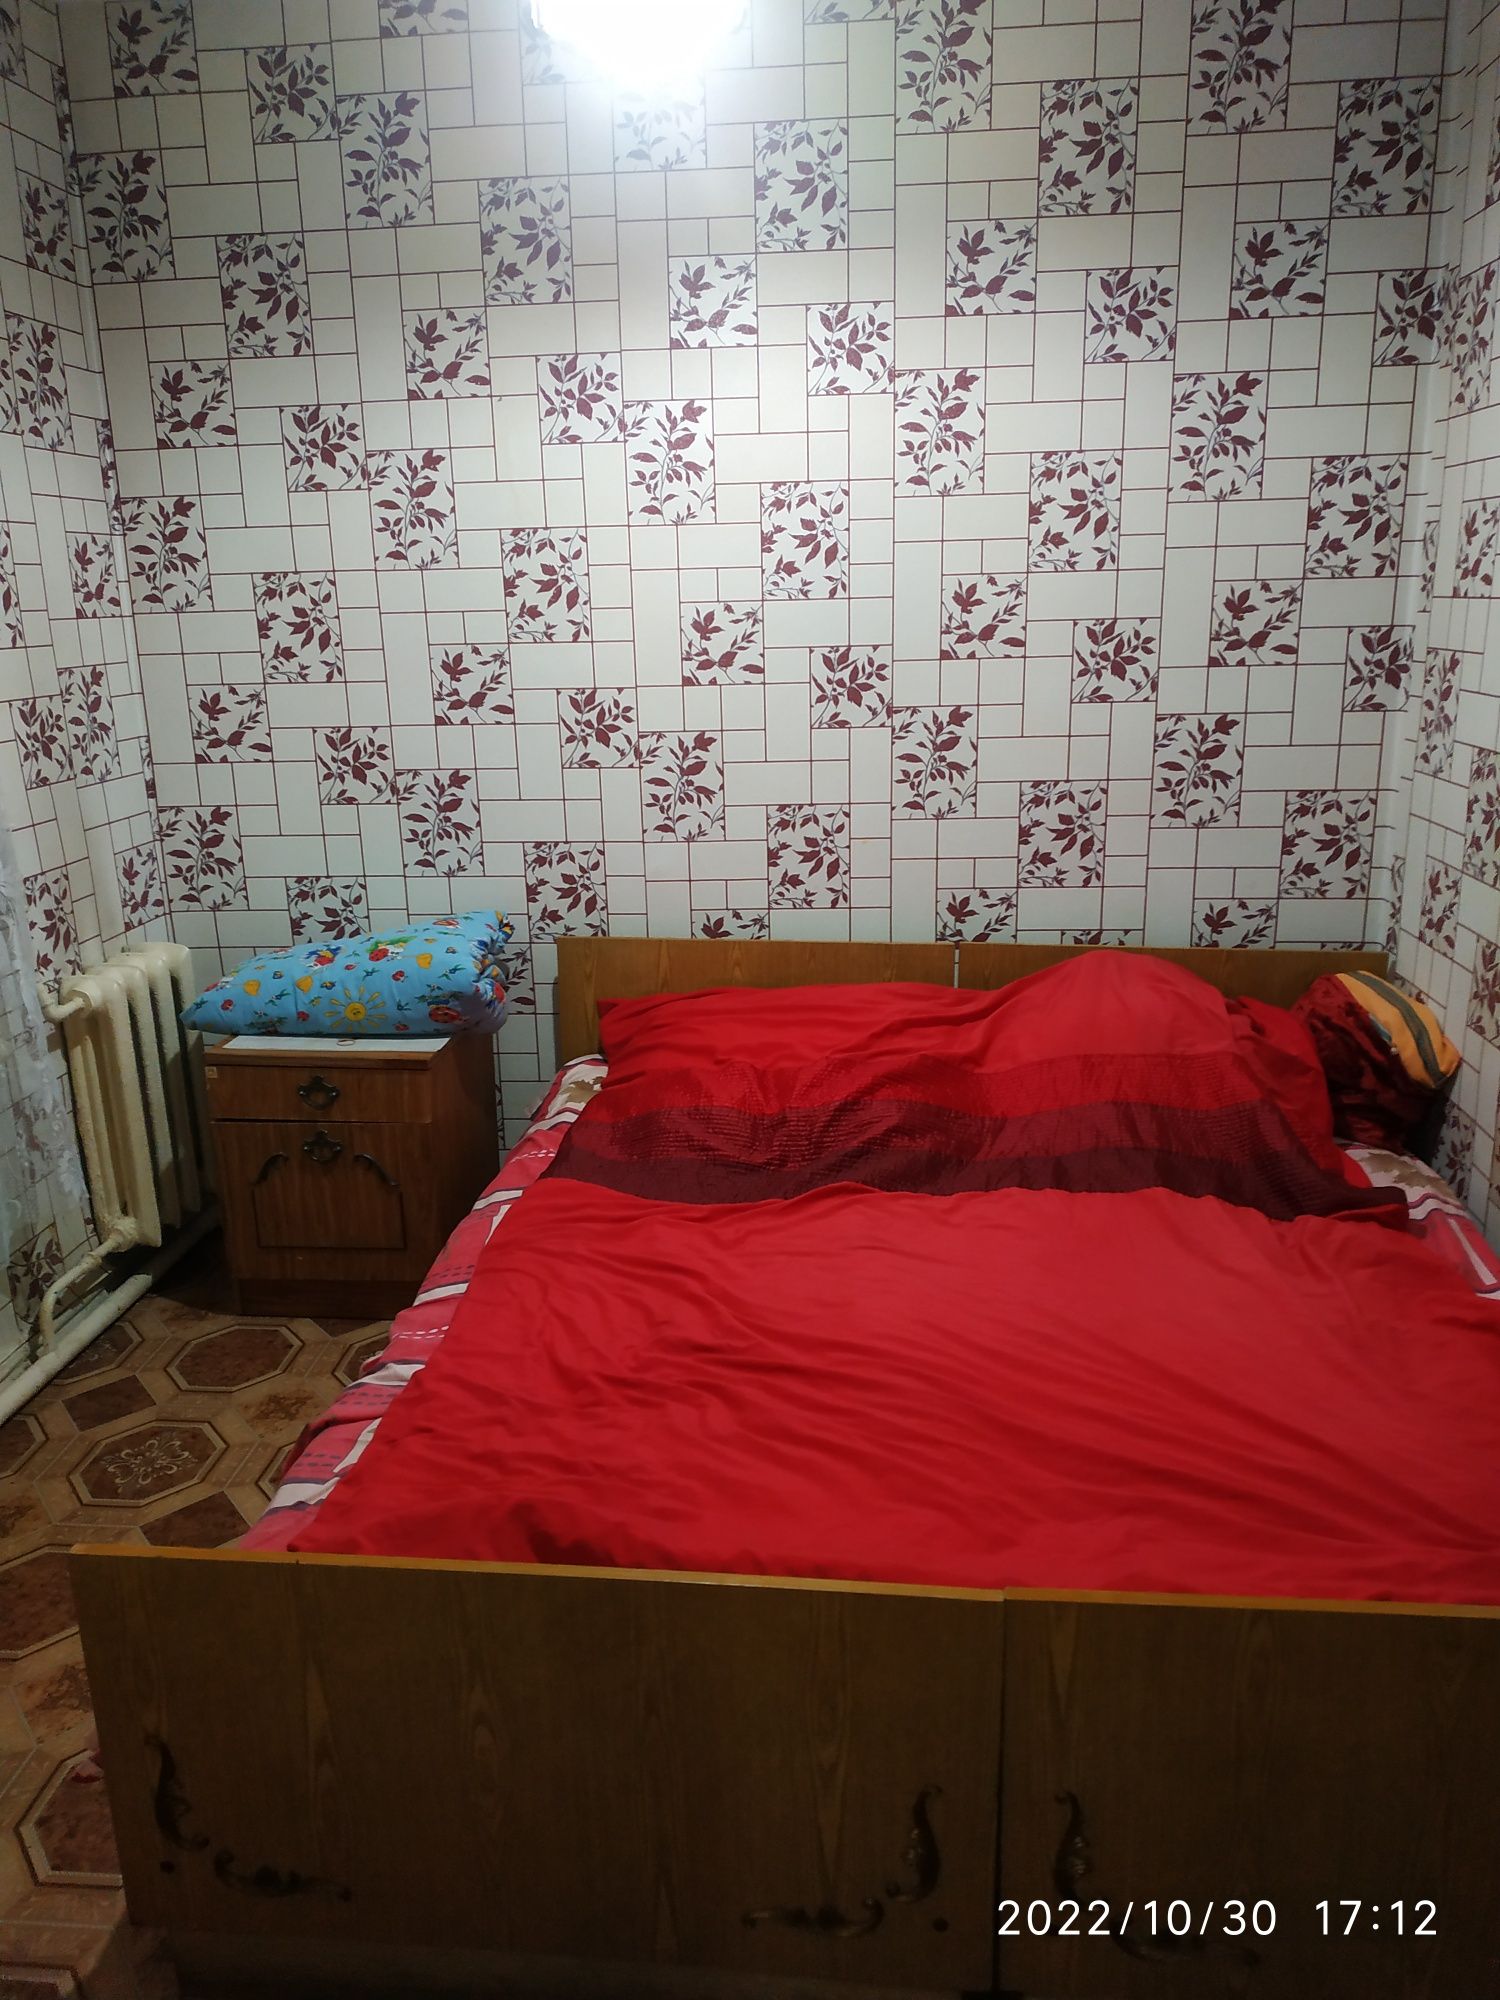 Сдам 2 комнатную квартиру в районе метро Гагарина, Москалевка